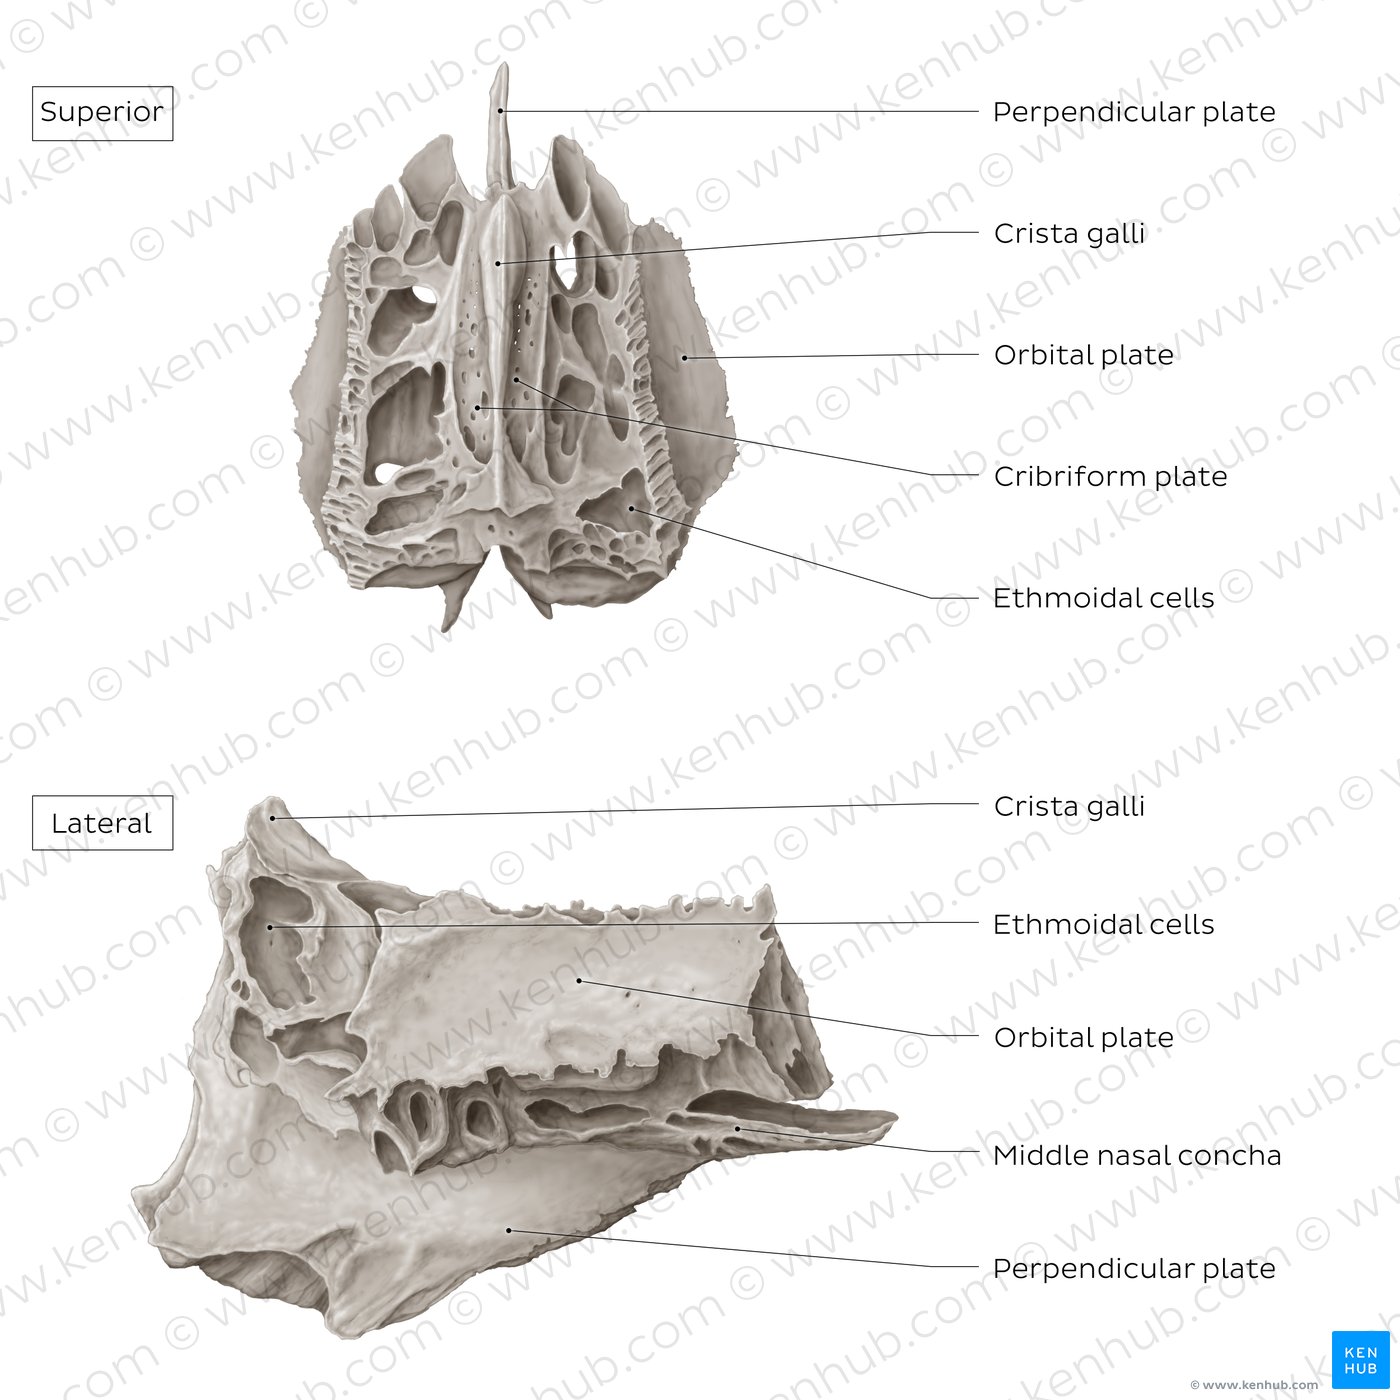 Ethmoid bone (superior and lateral views)